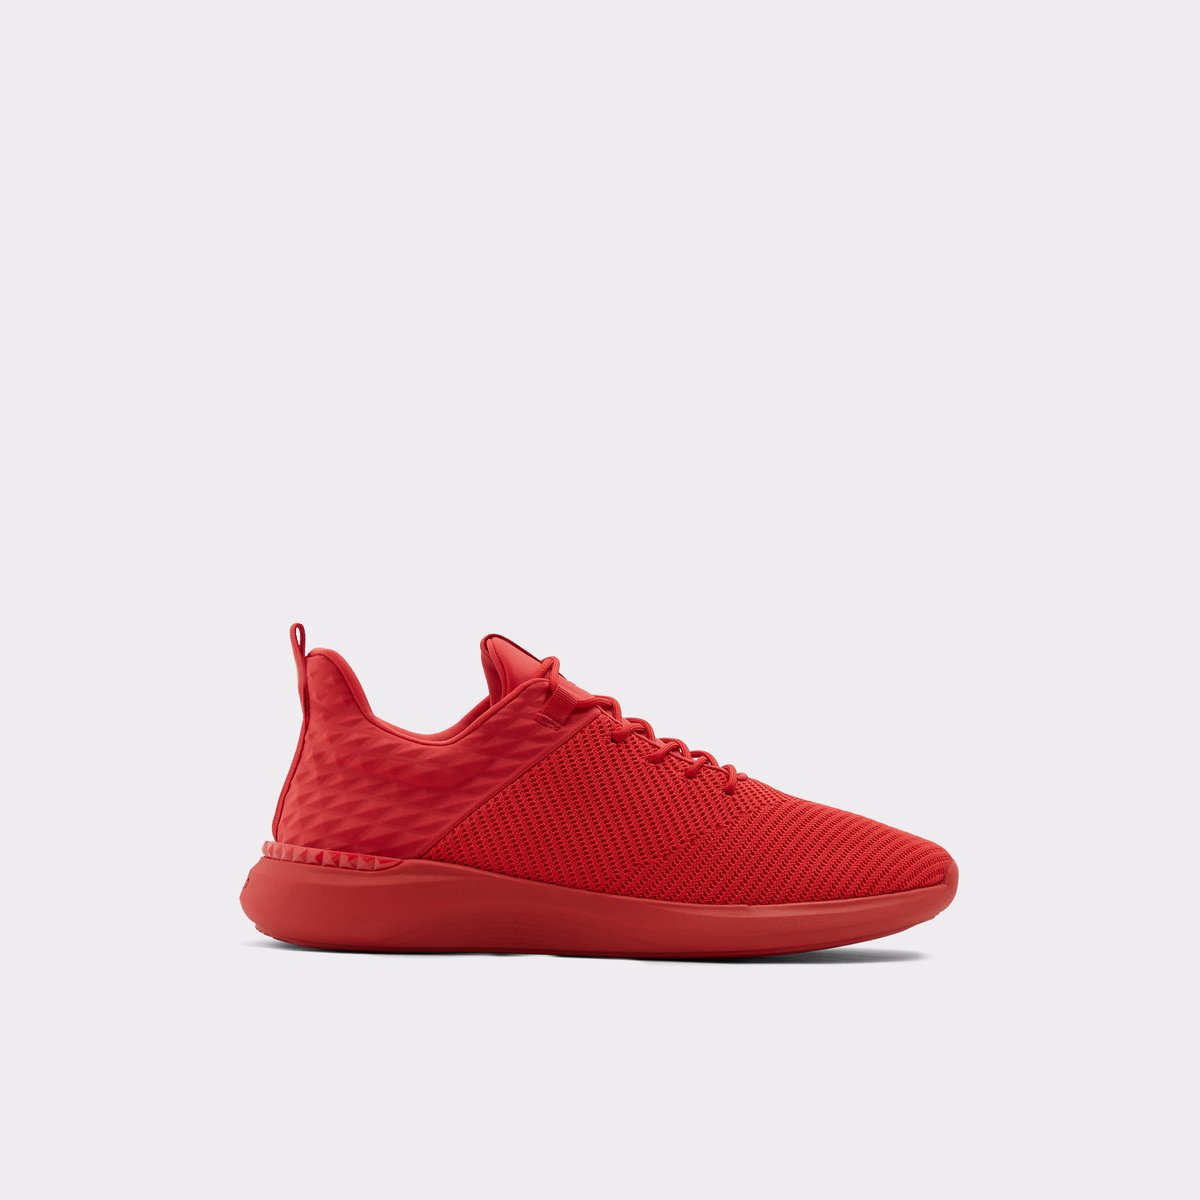 aldo red shoes inexpensive c27f4 b50c5